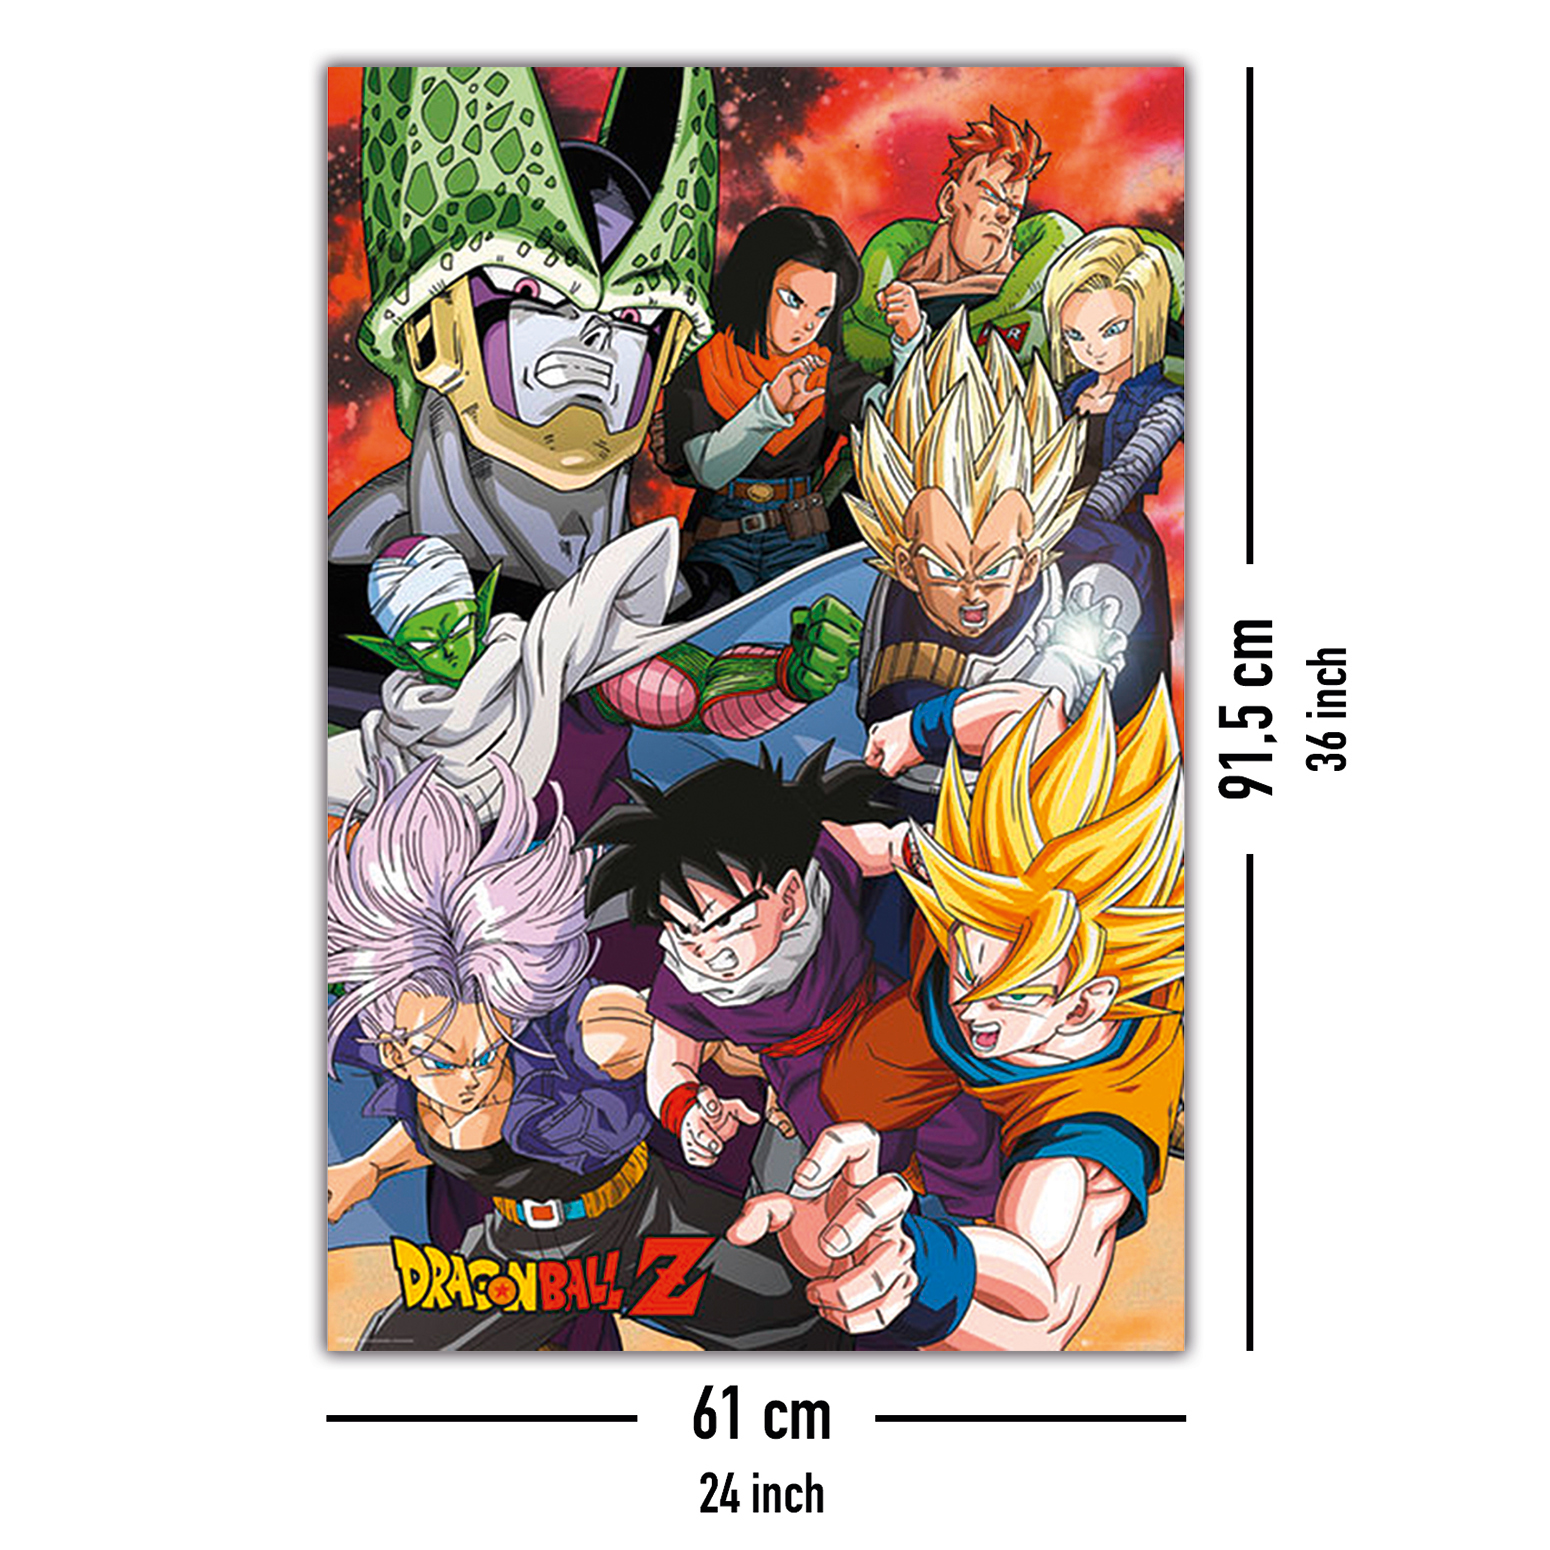 Dragon Ball z group | Poster